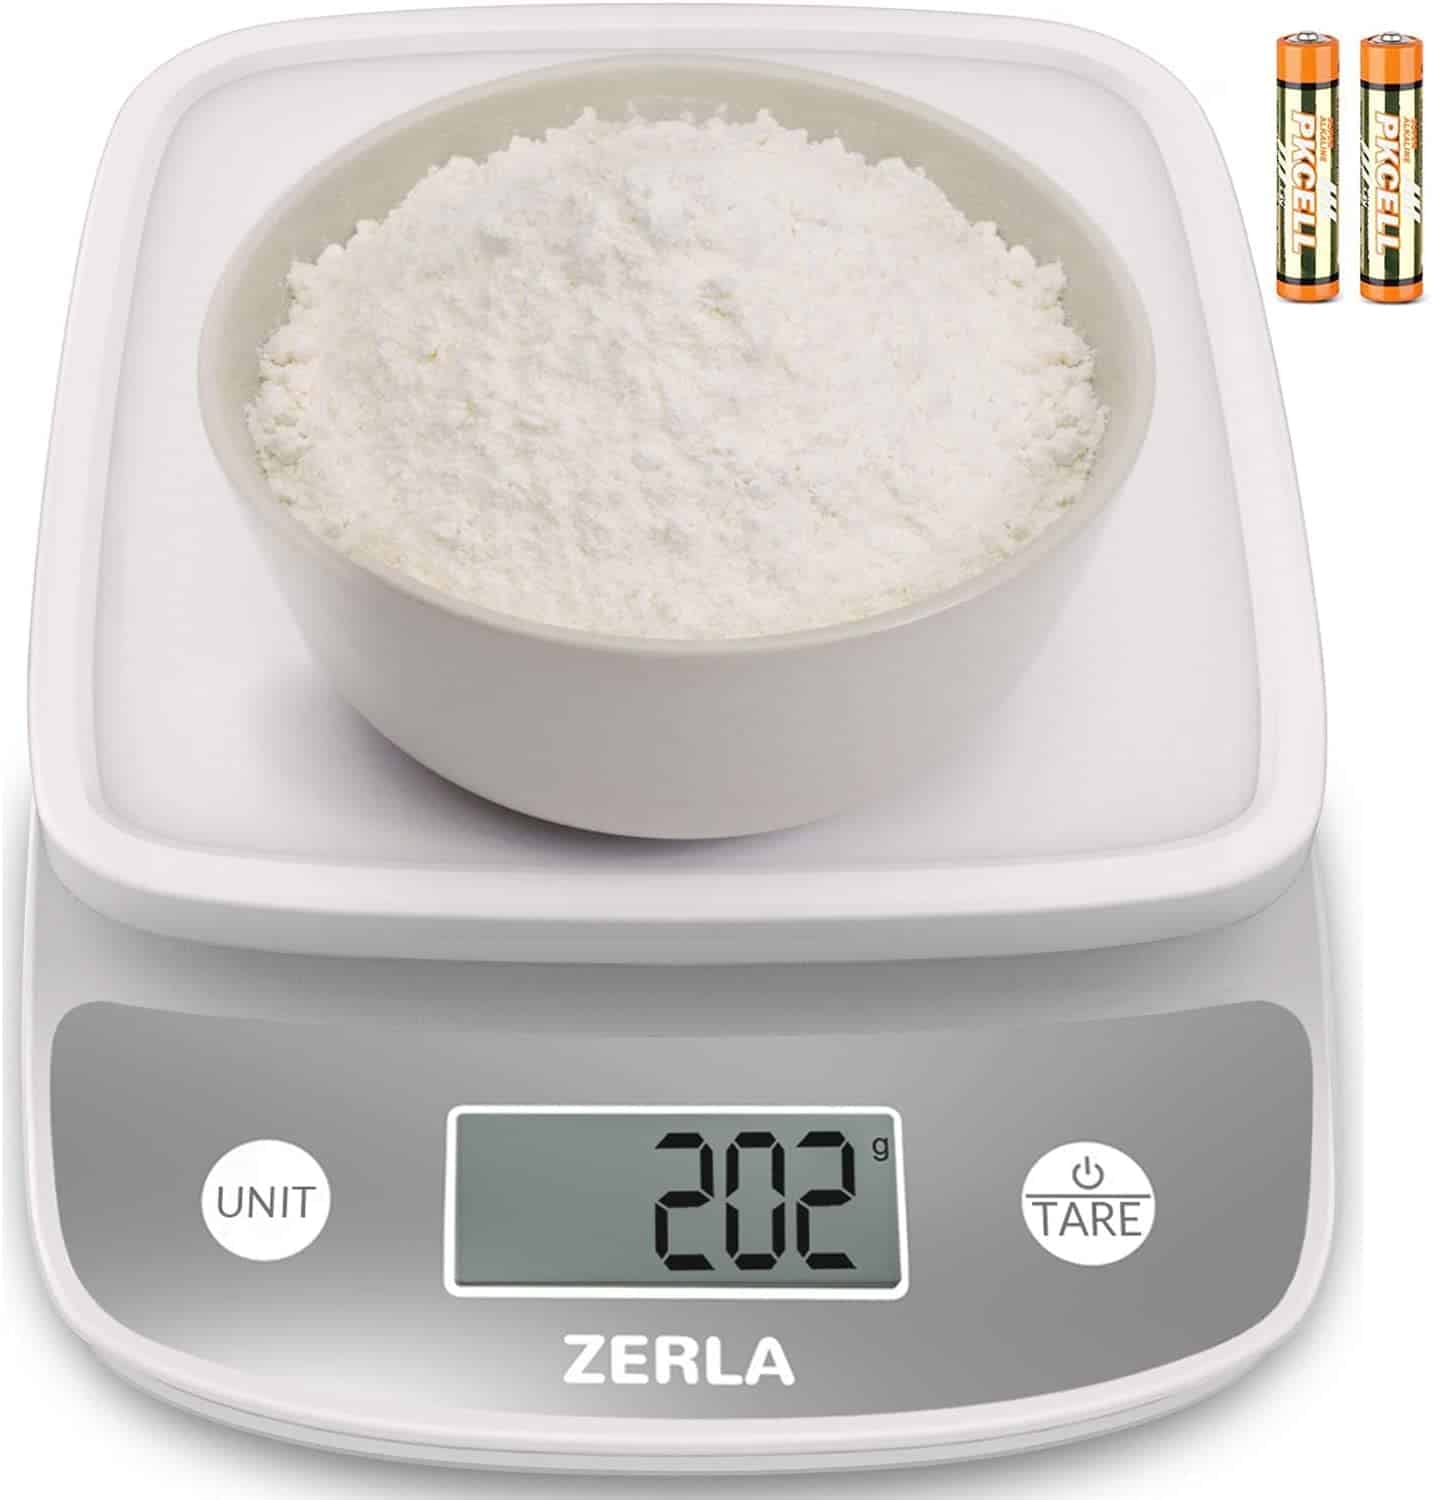 Zerla Digital Kitchen Scale